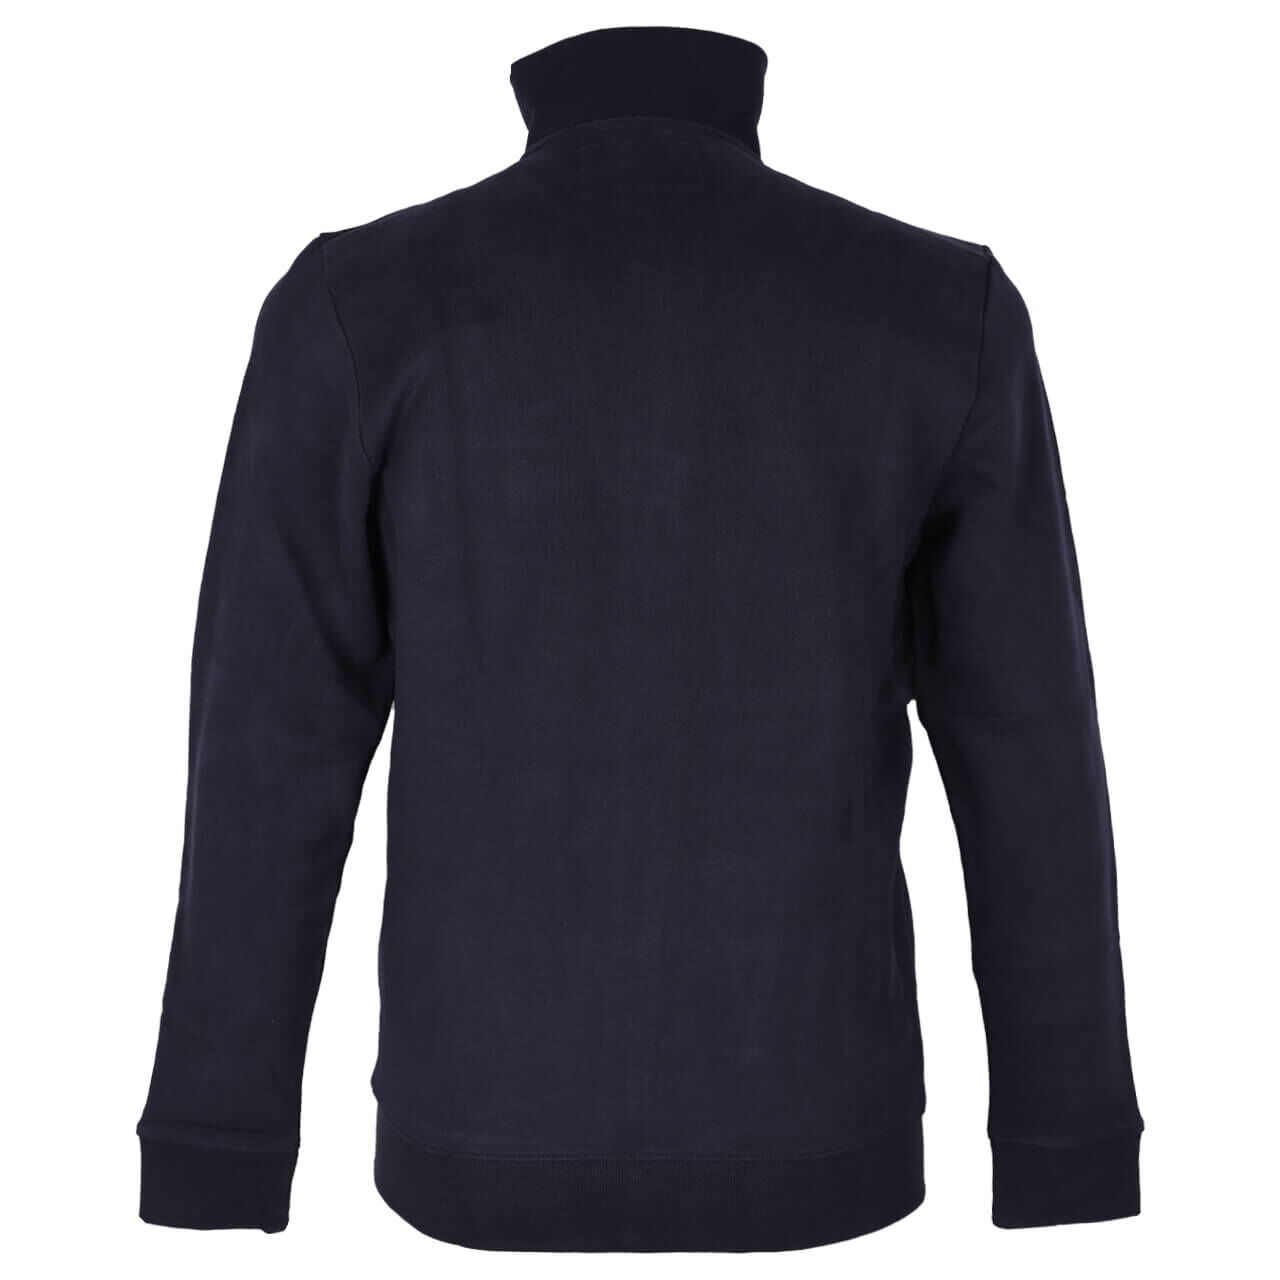 Tom Tailor Herren Sweatjacke knitted navy blue